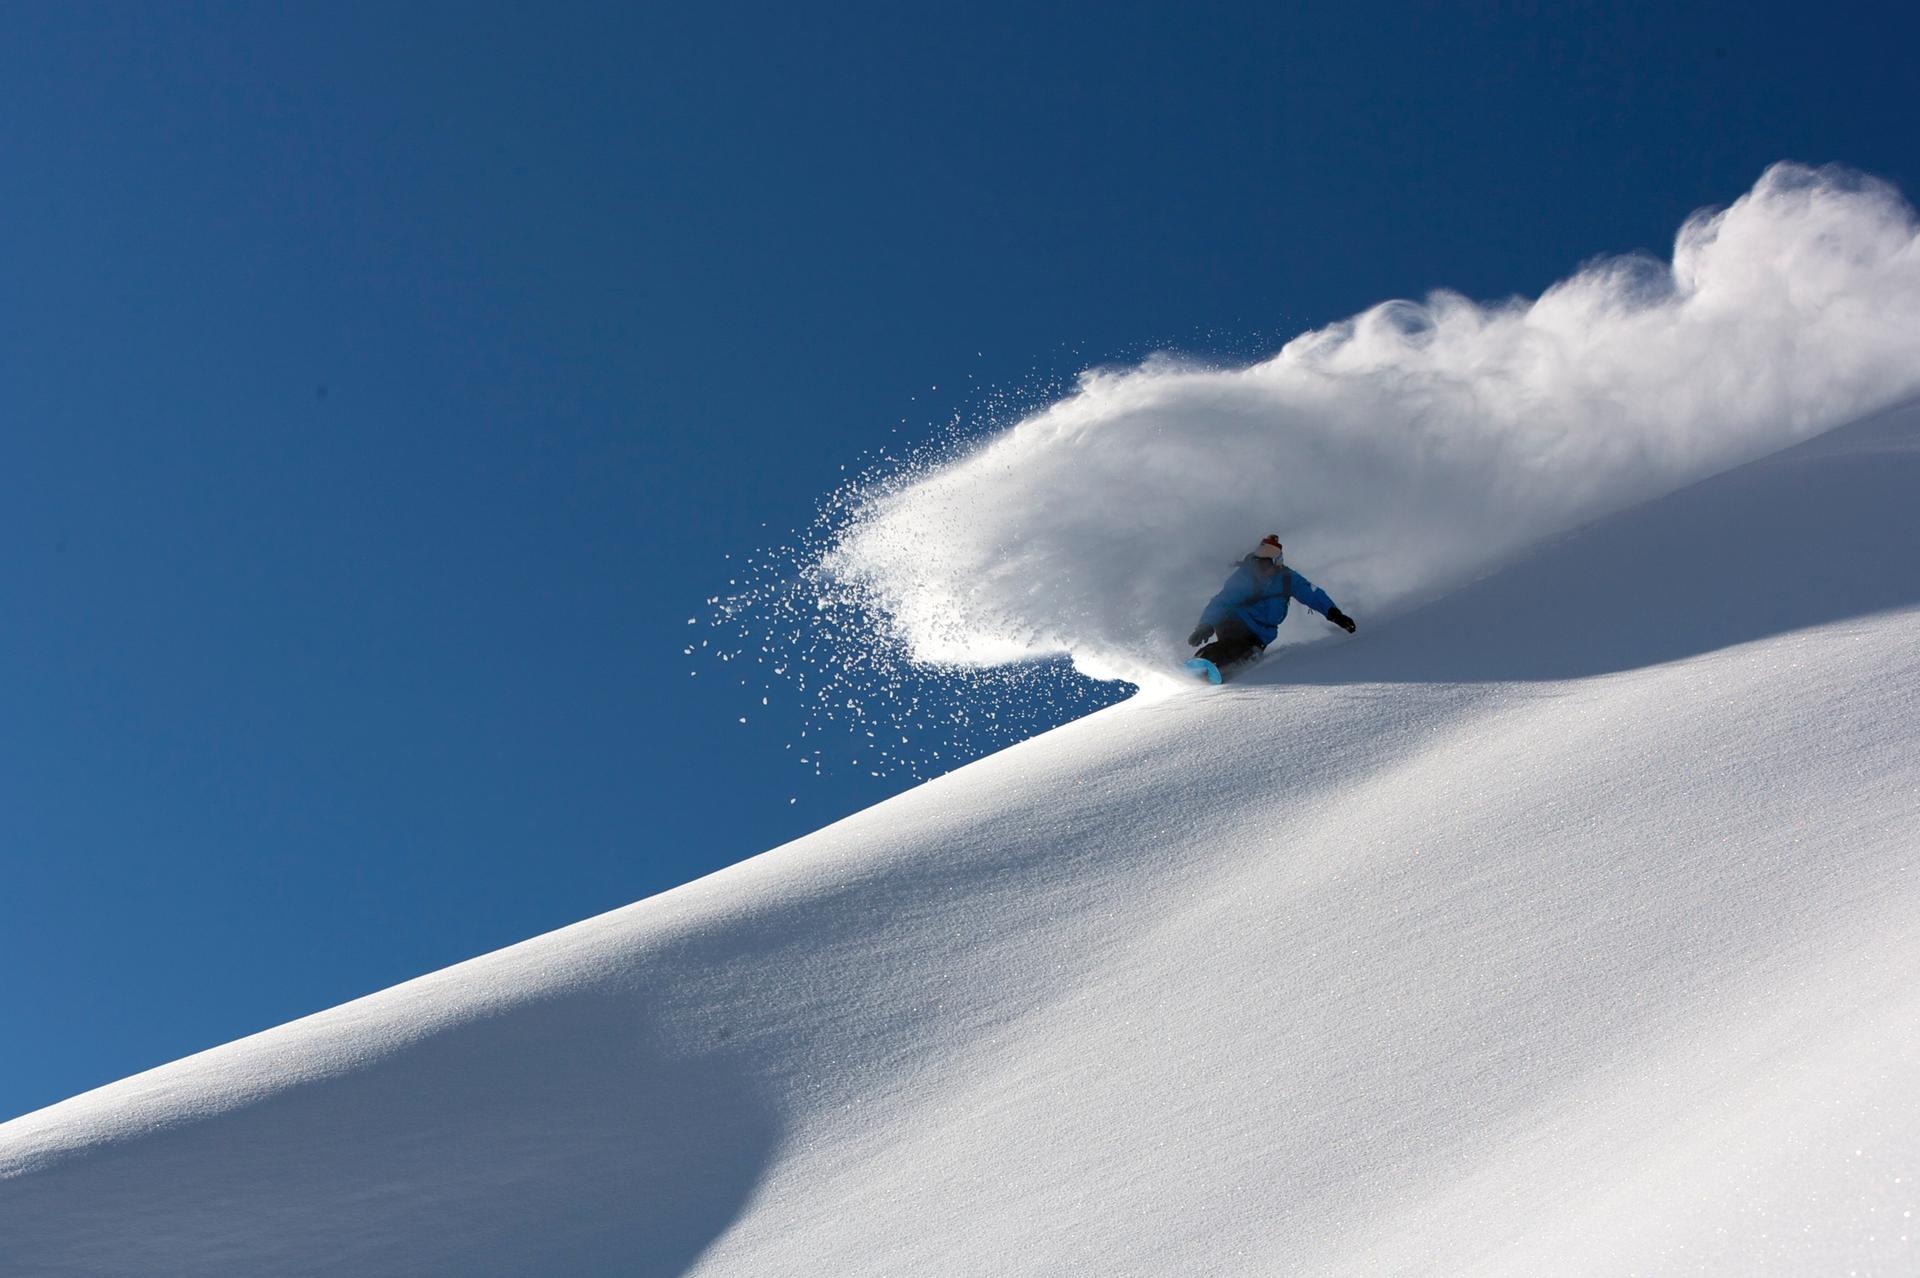 Snowboarding: Alpine snowboarding, Recreational winter sport, Competitive sport. 1920x1280 HD Wallpaper.